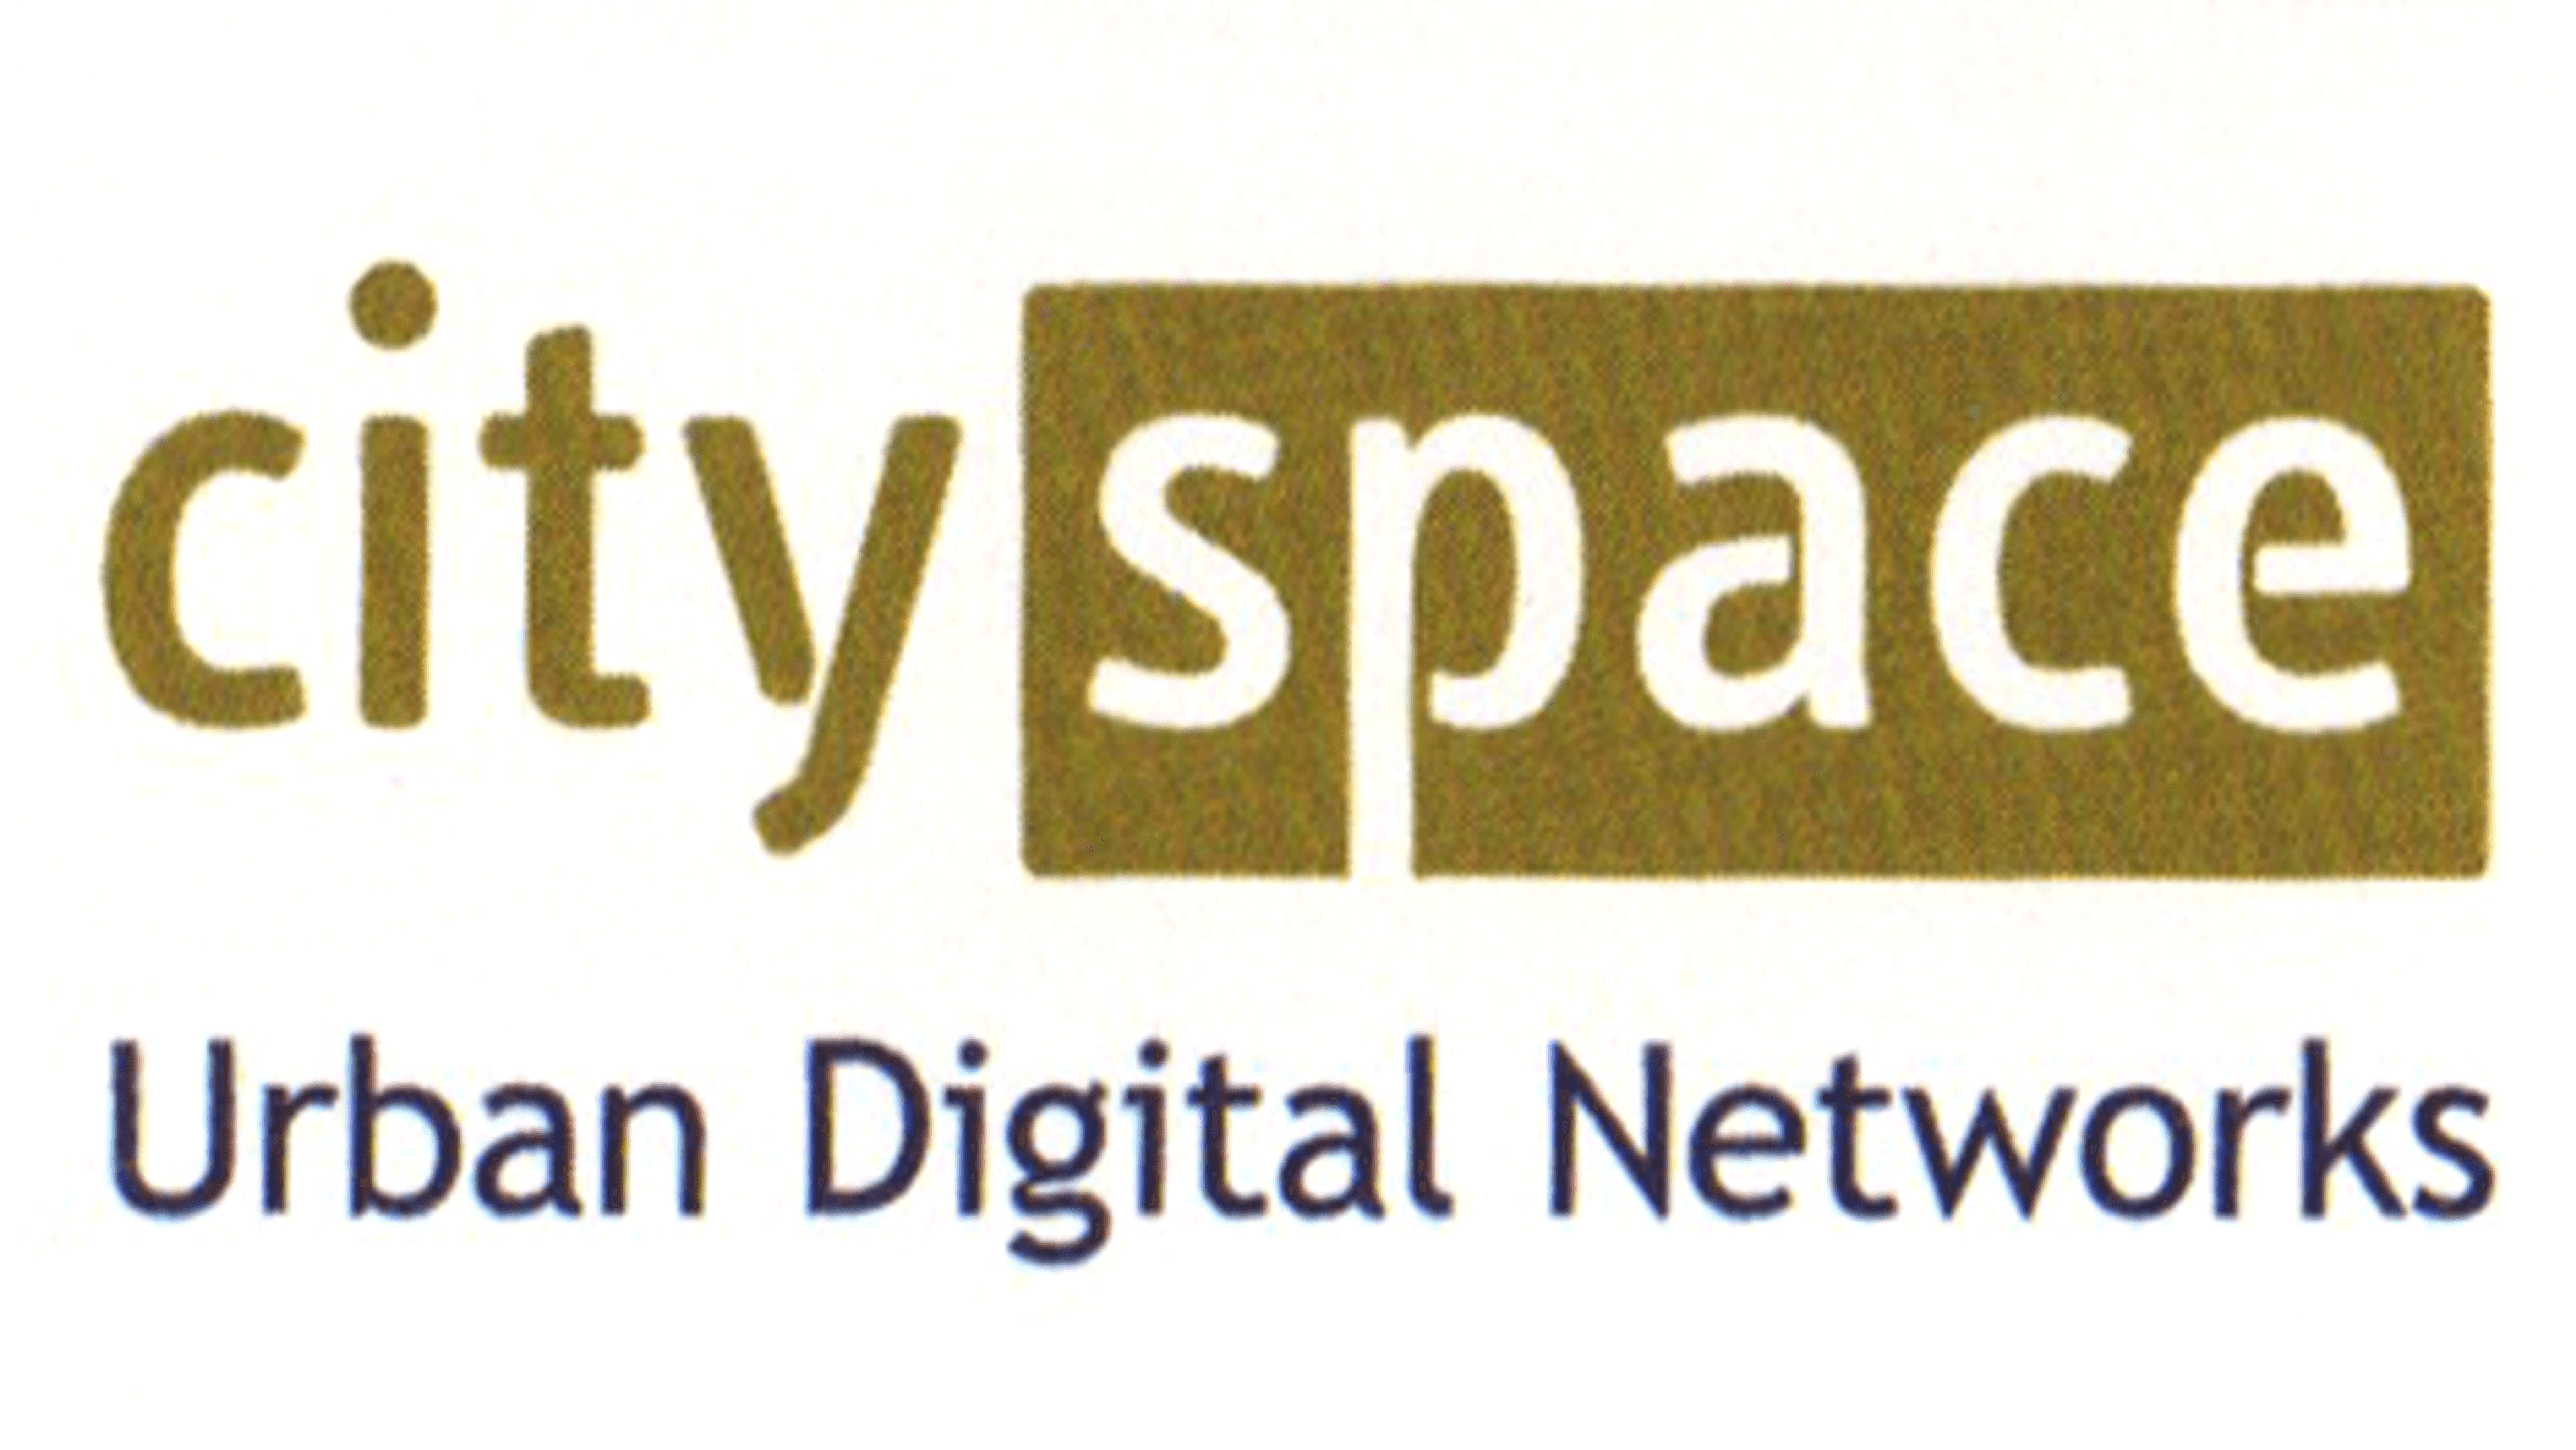 Cityspace Urban Digital Networks logo